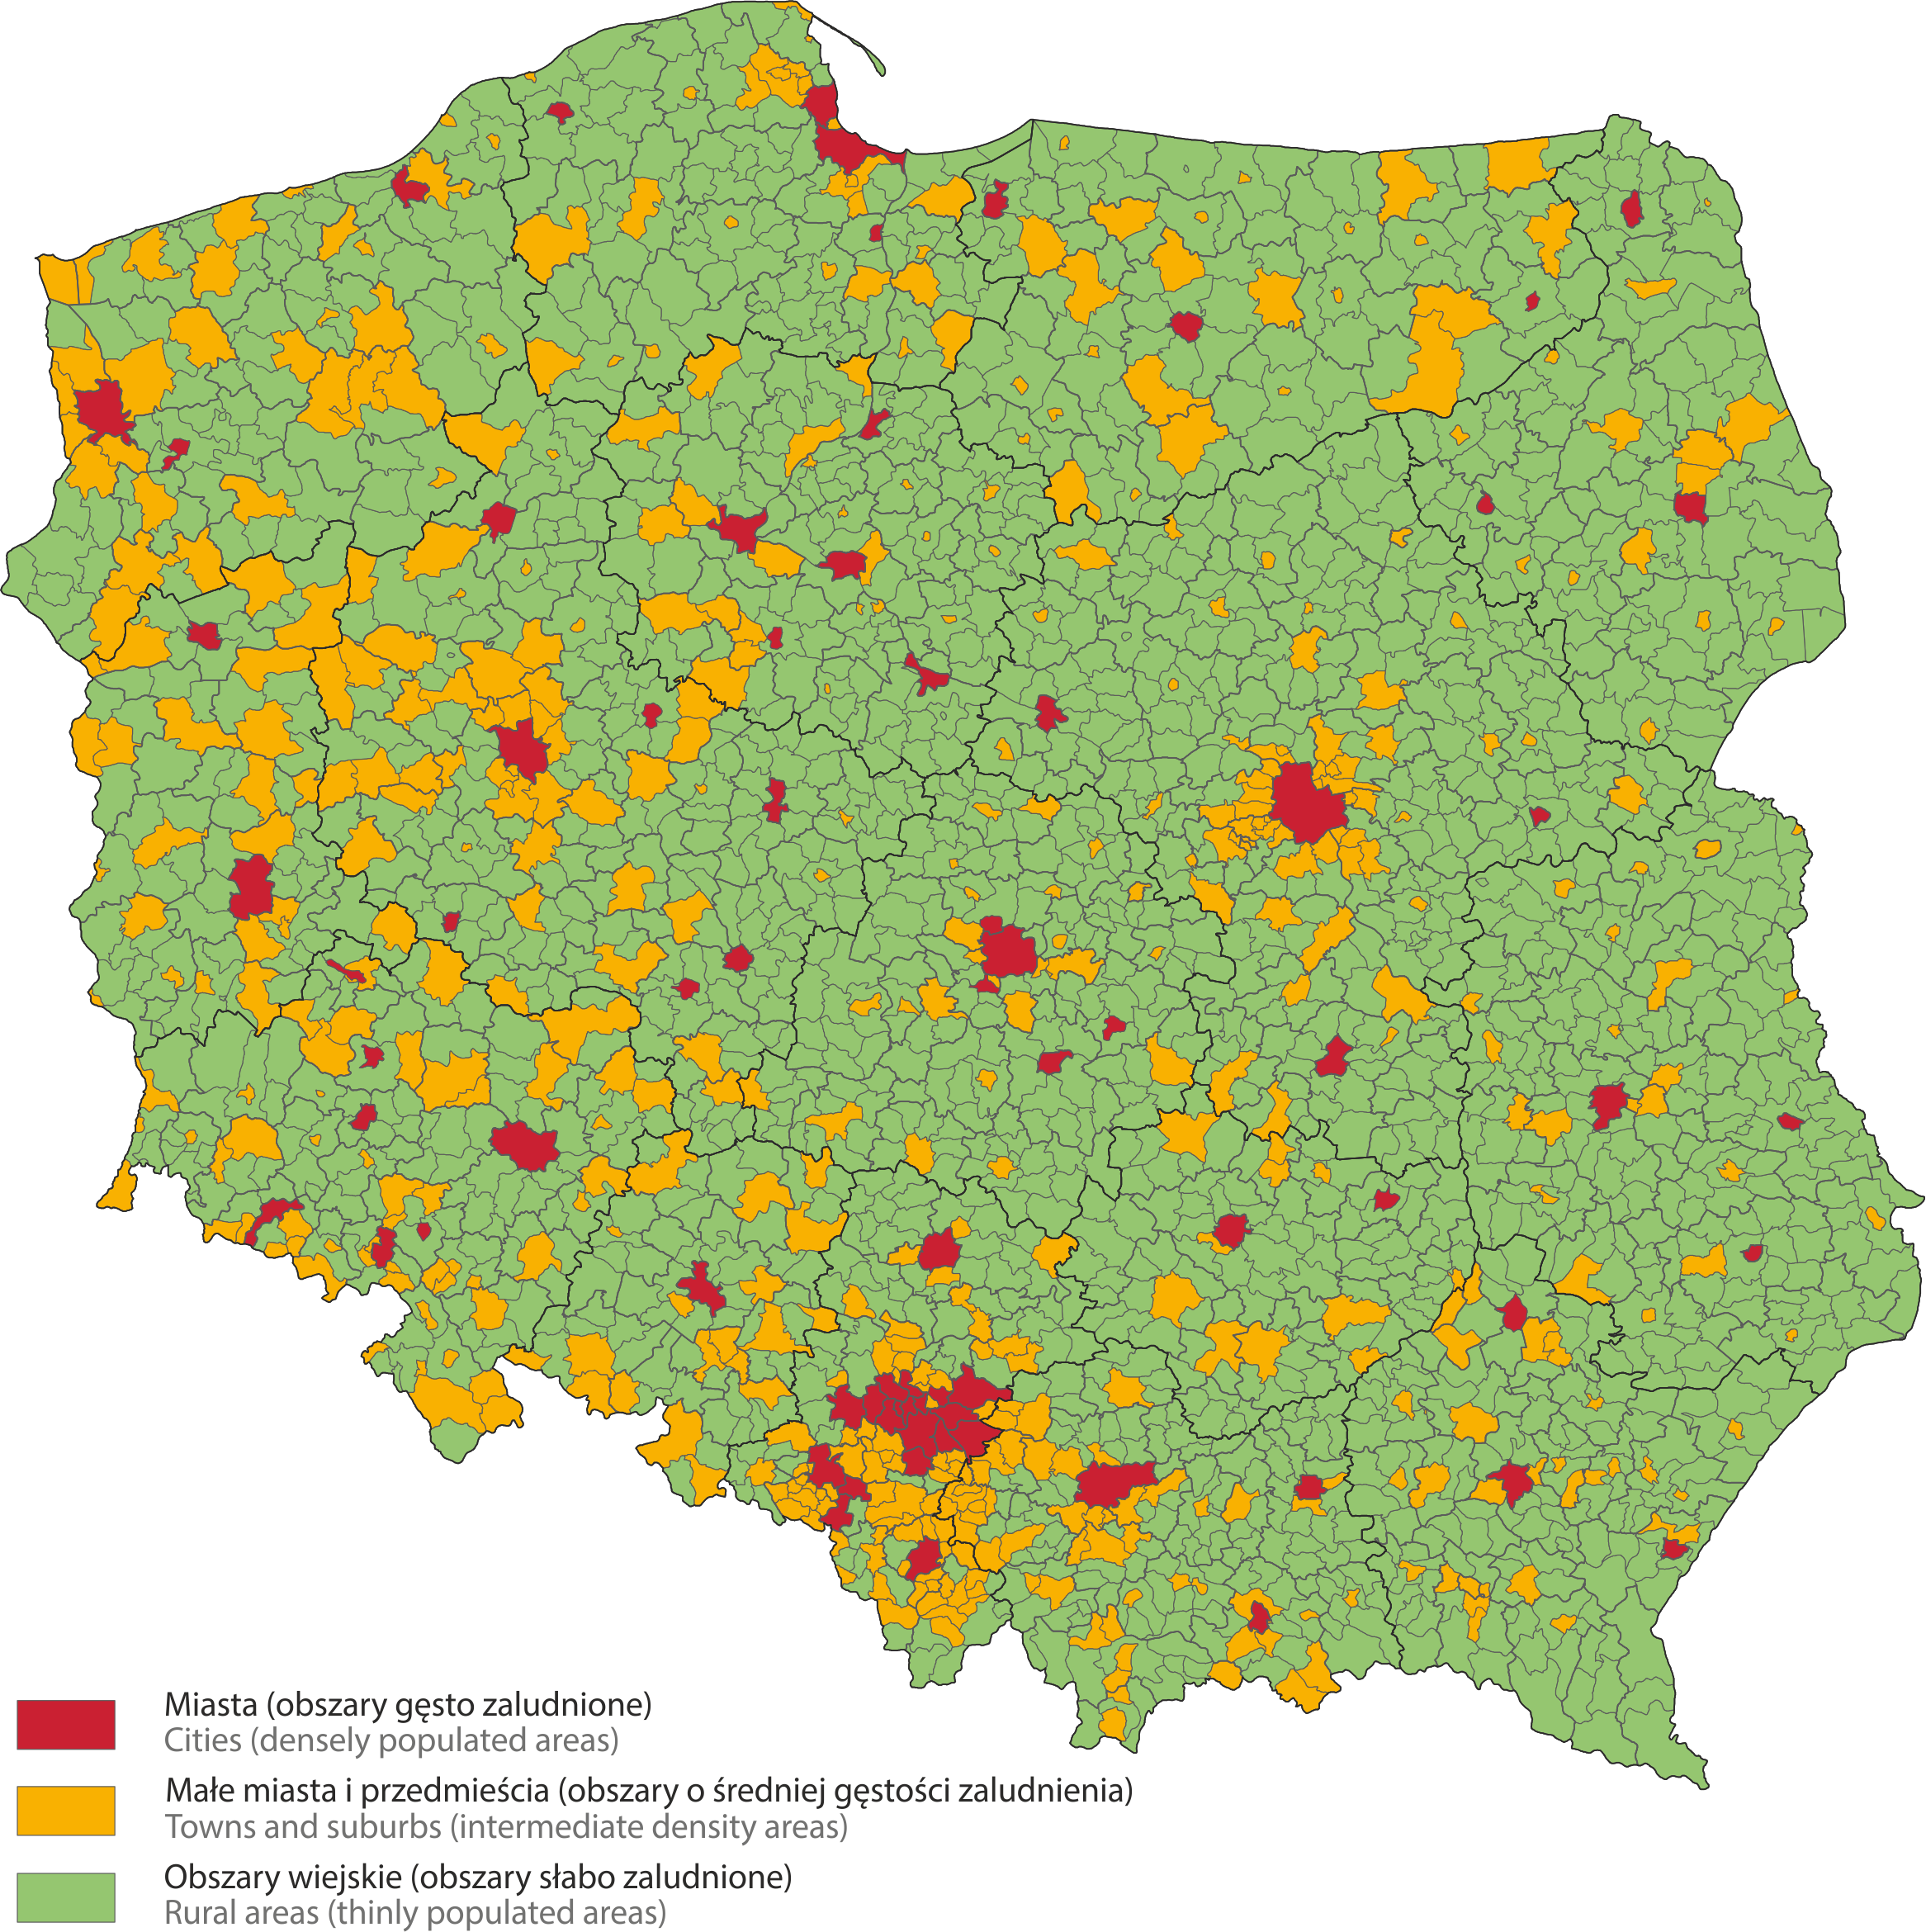 Gminas in Poland according to the degree of urbanisation (DEGURBA) in 2018